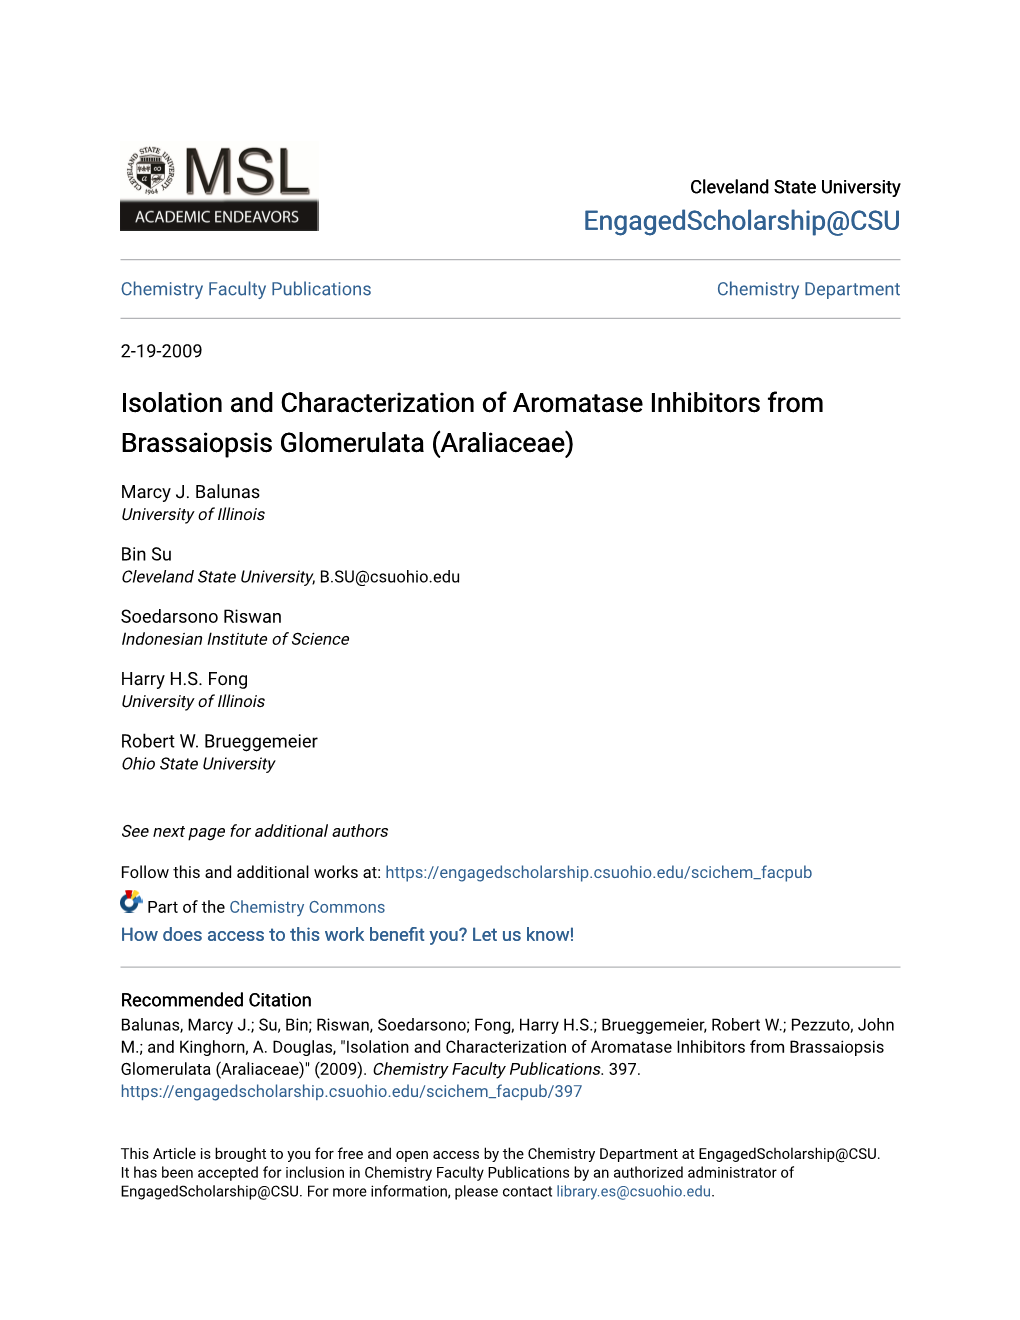 Isolation and Characterization of Aromatase Inhibitors from Brassaiopsis Glomerulata (Araliaceae)